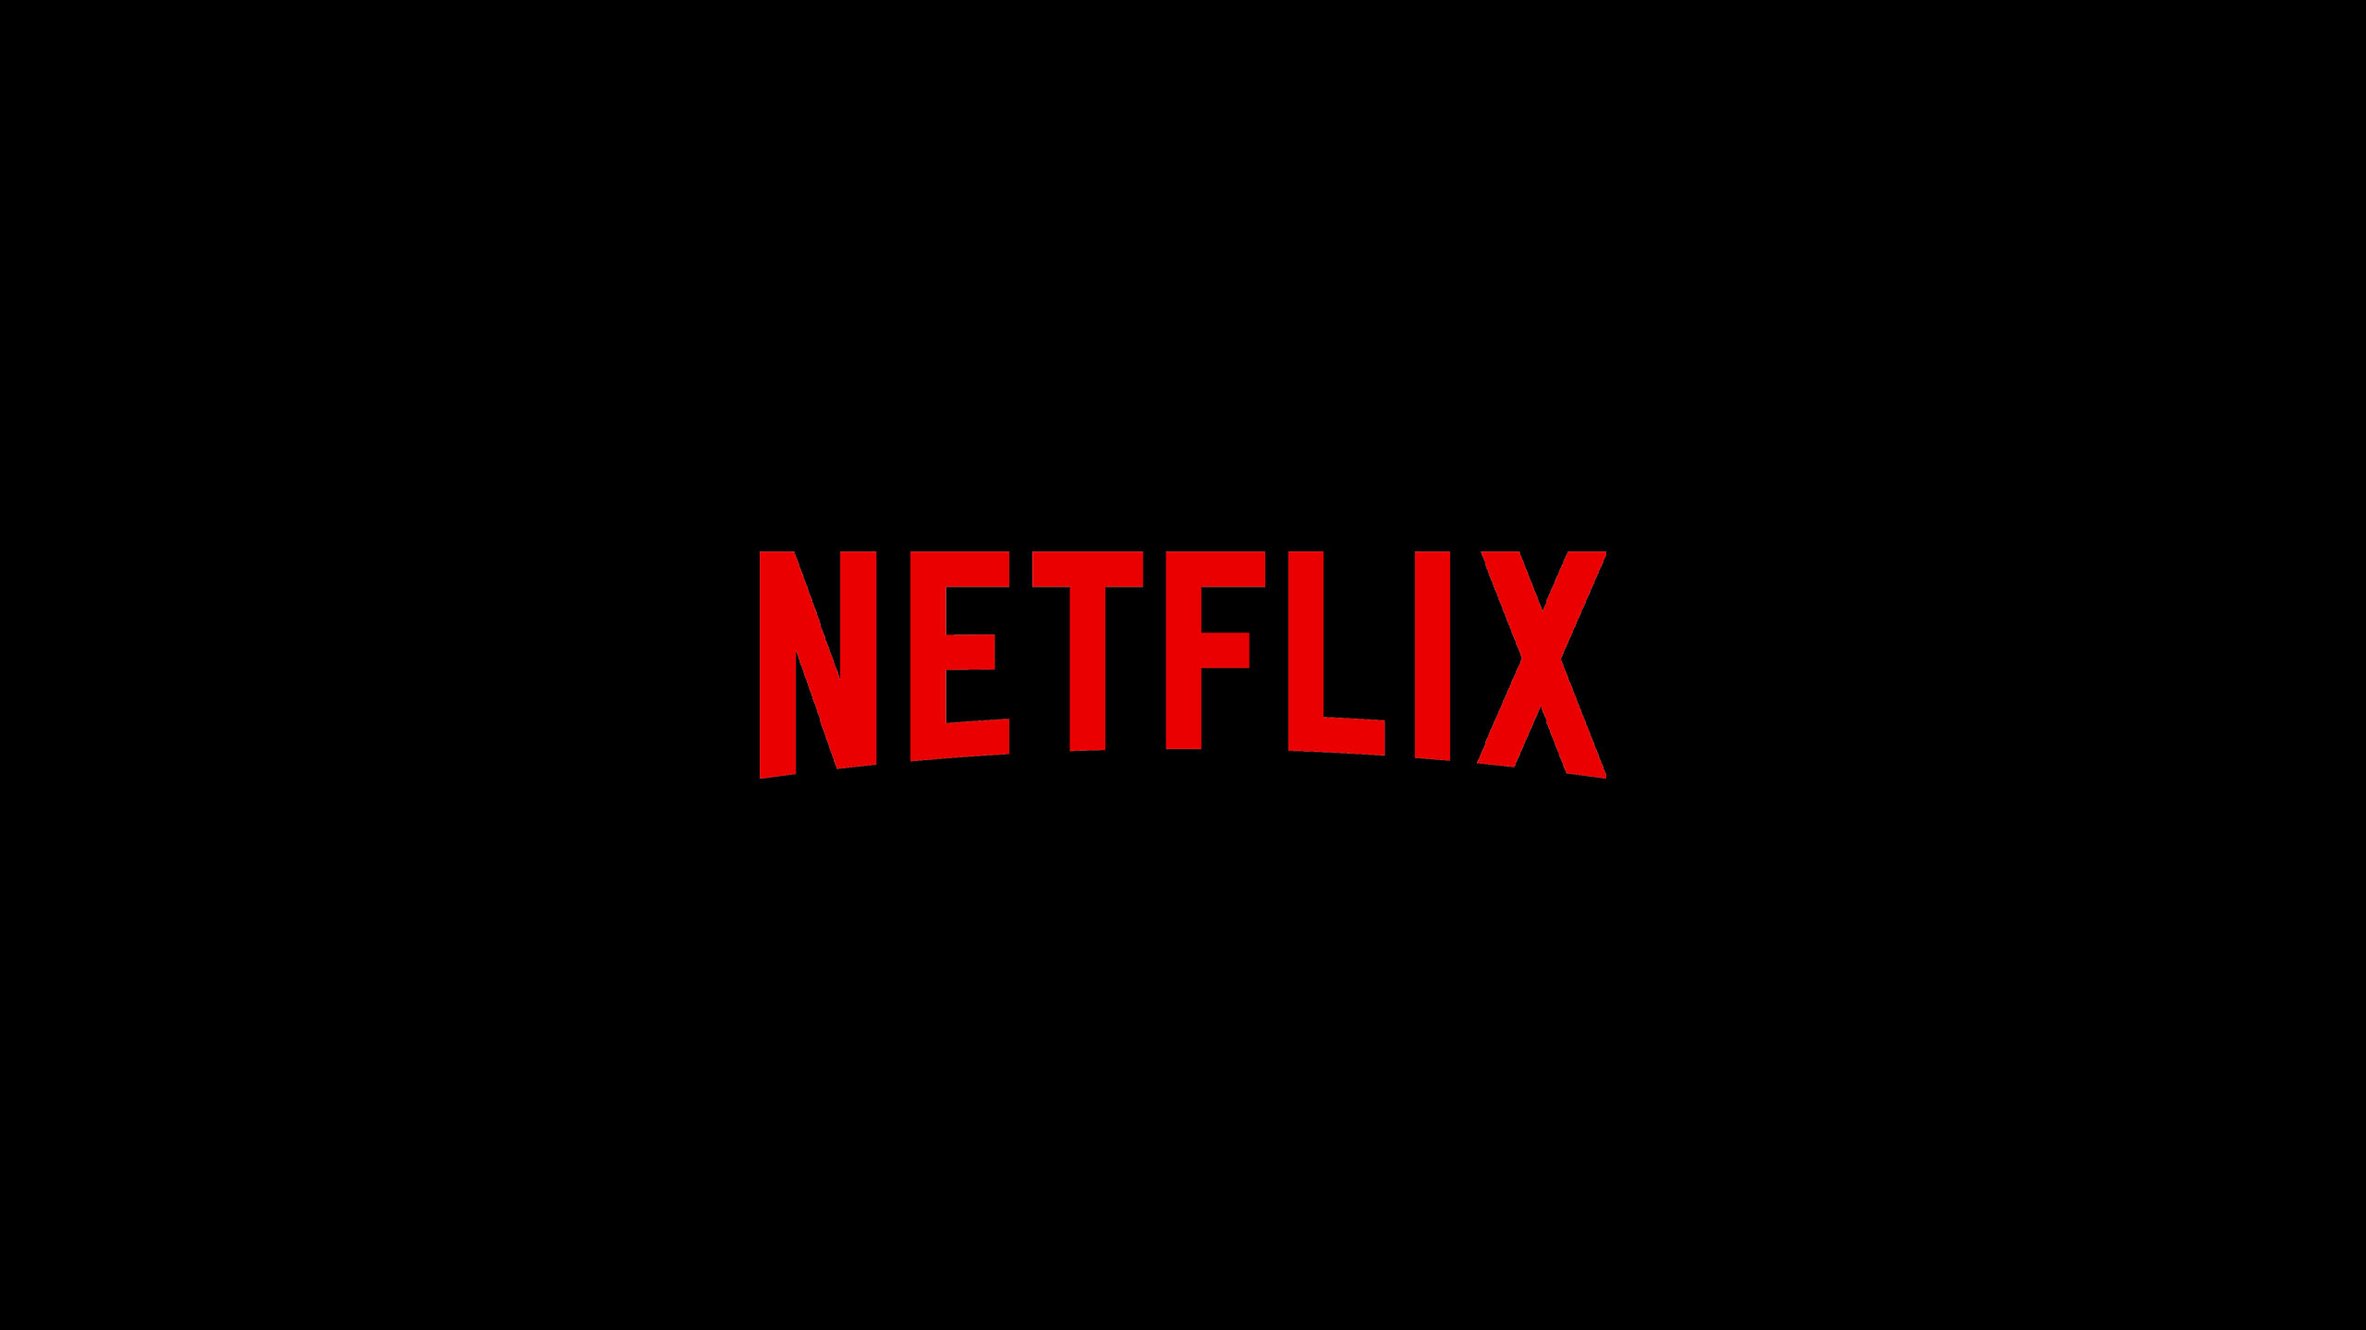 Netflix's The Mole Season 2 Casting Call